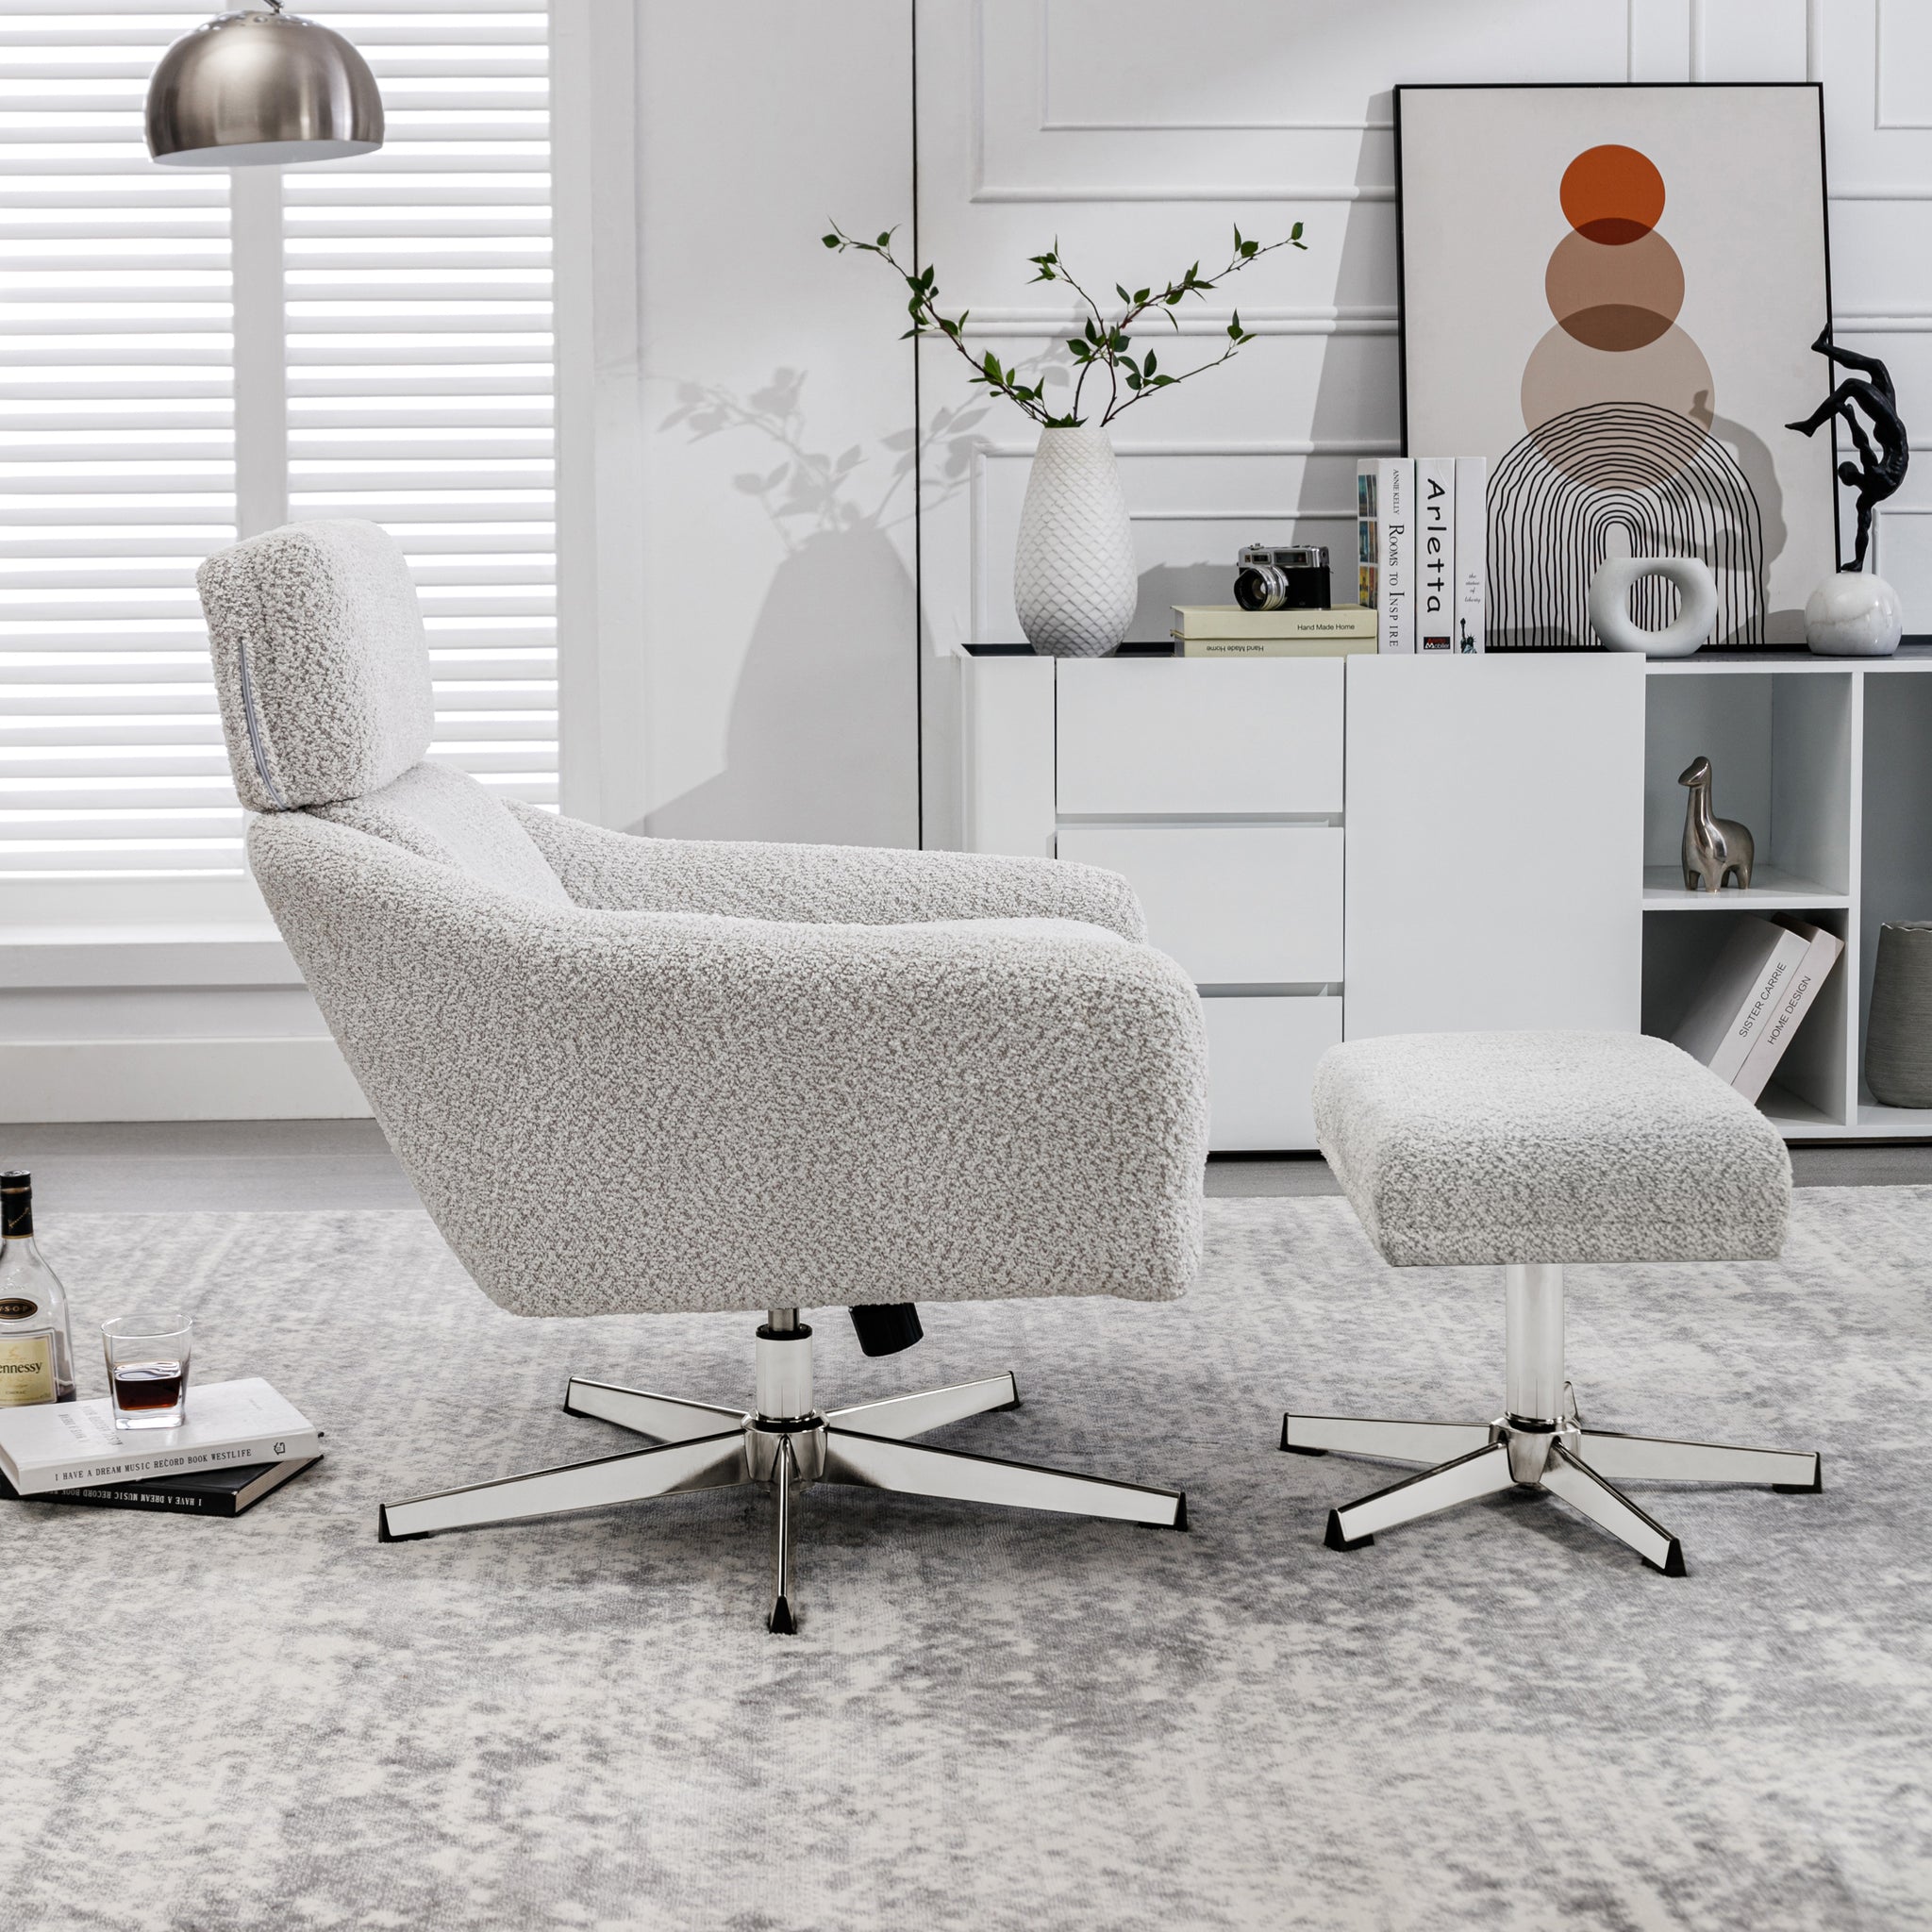 Swivel Armchair with Ottoman for Living Room, Bedroom beige-linen